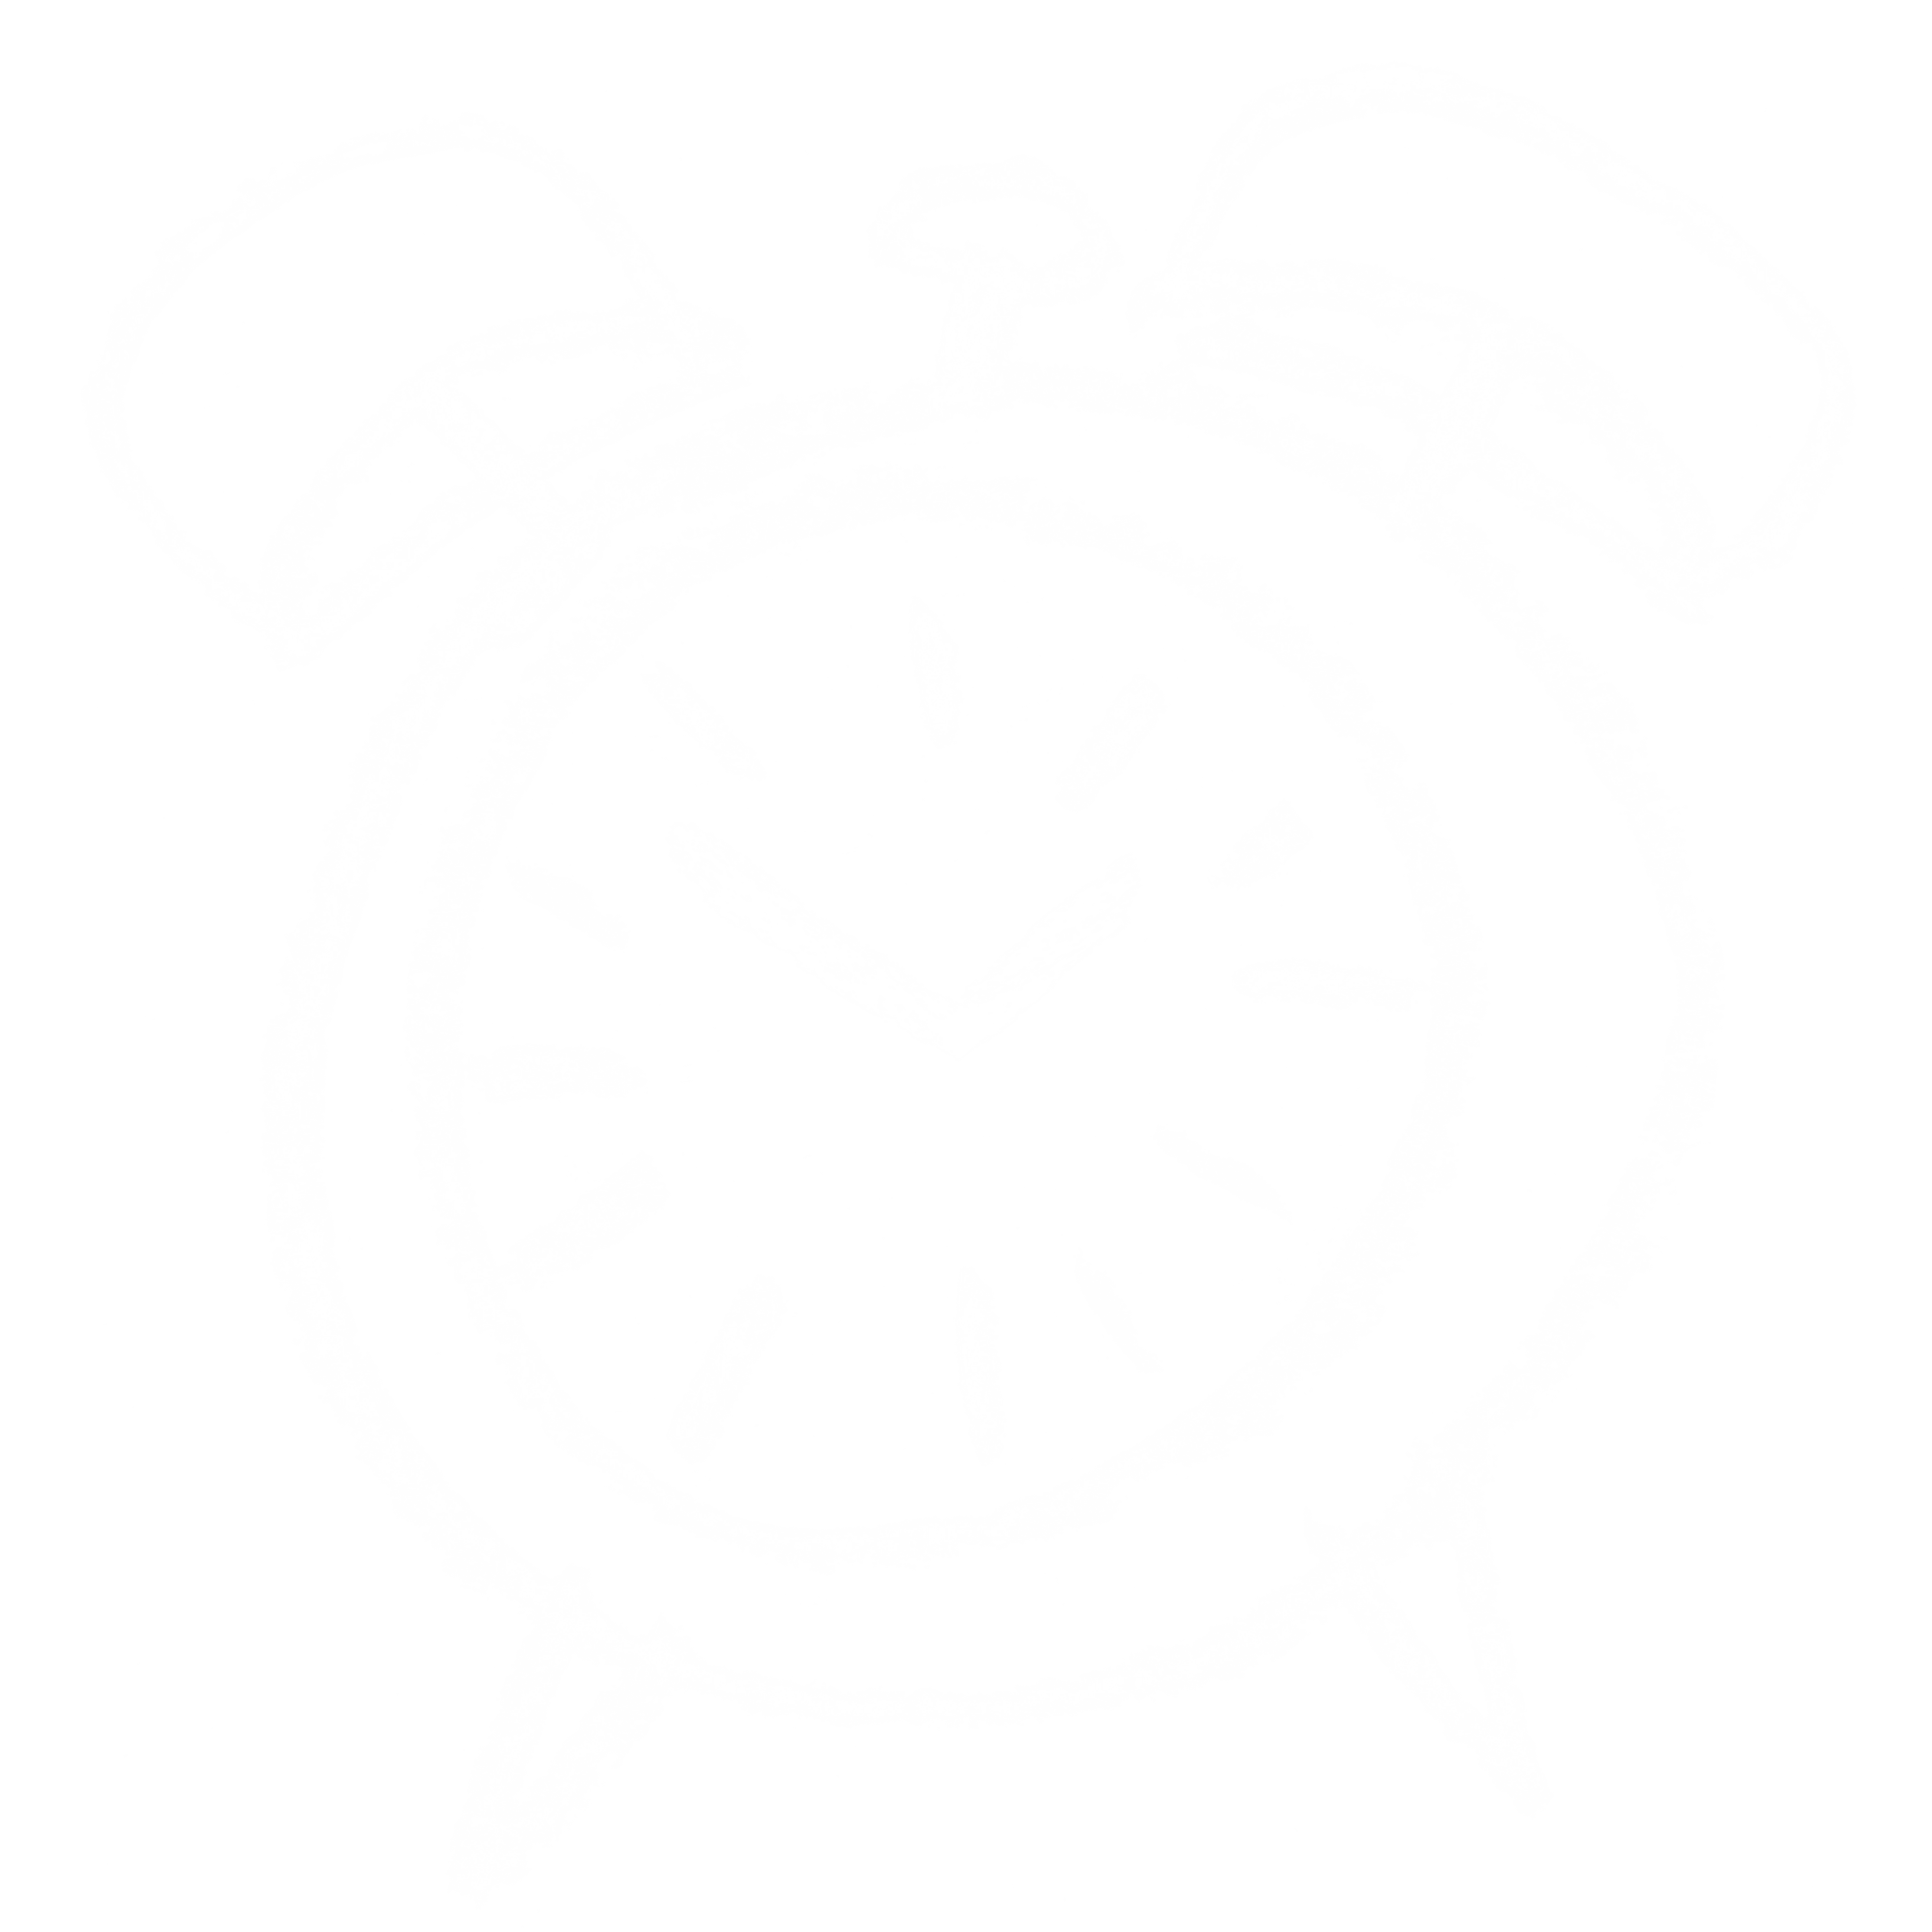 alarm clock illustration in white